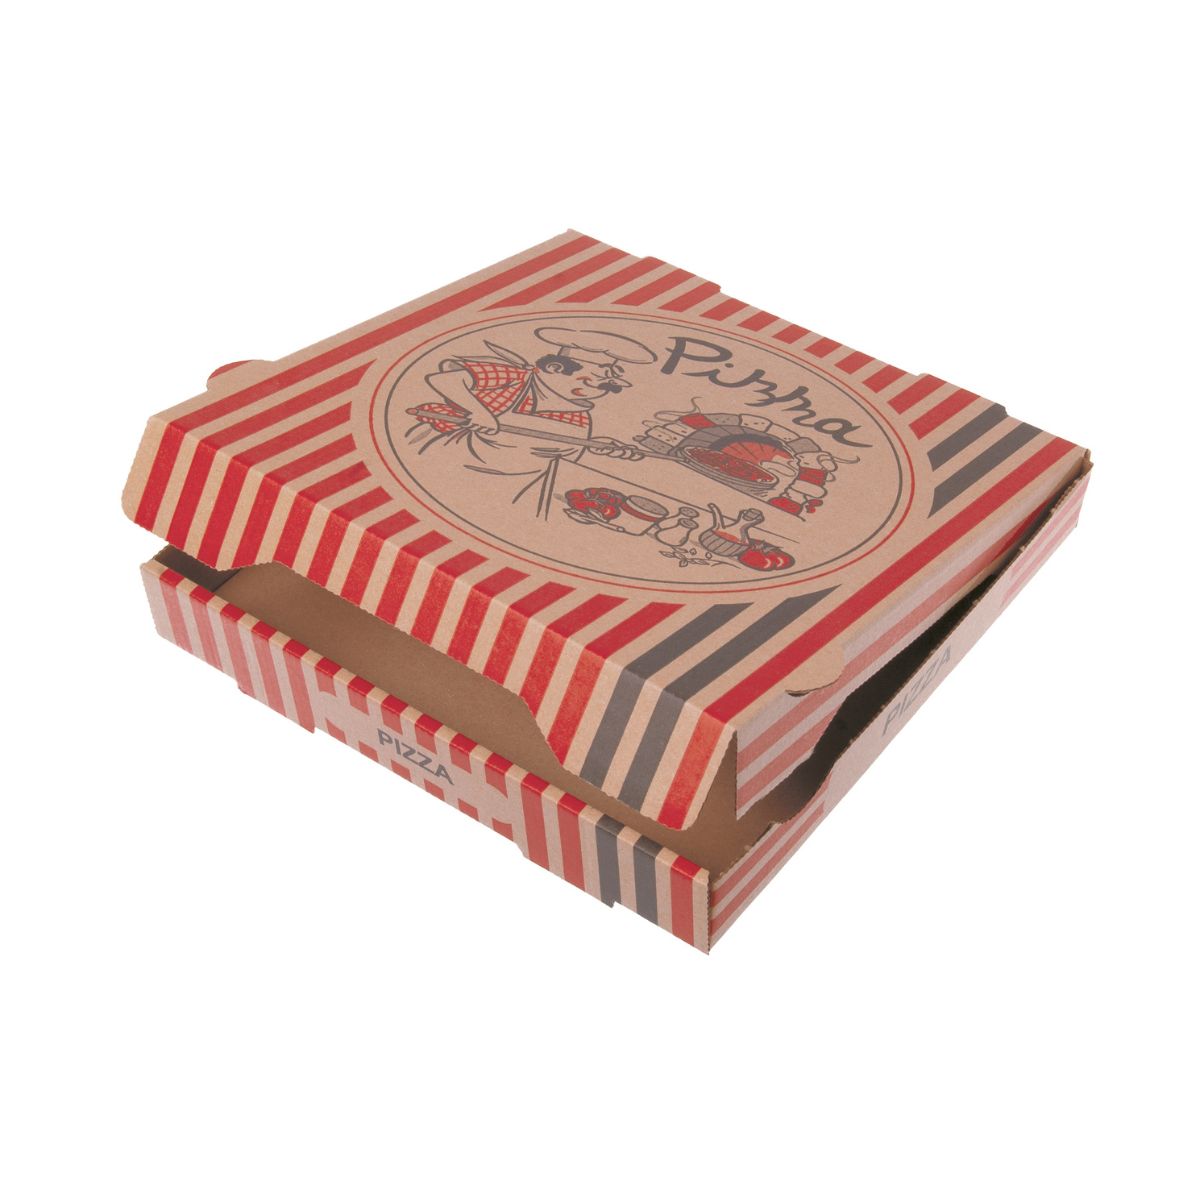 Pizzabox 30x30x4cm | Kraft rot-braun